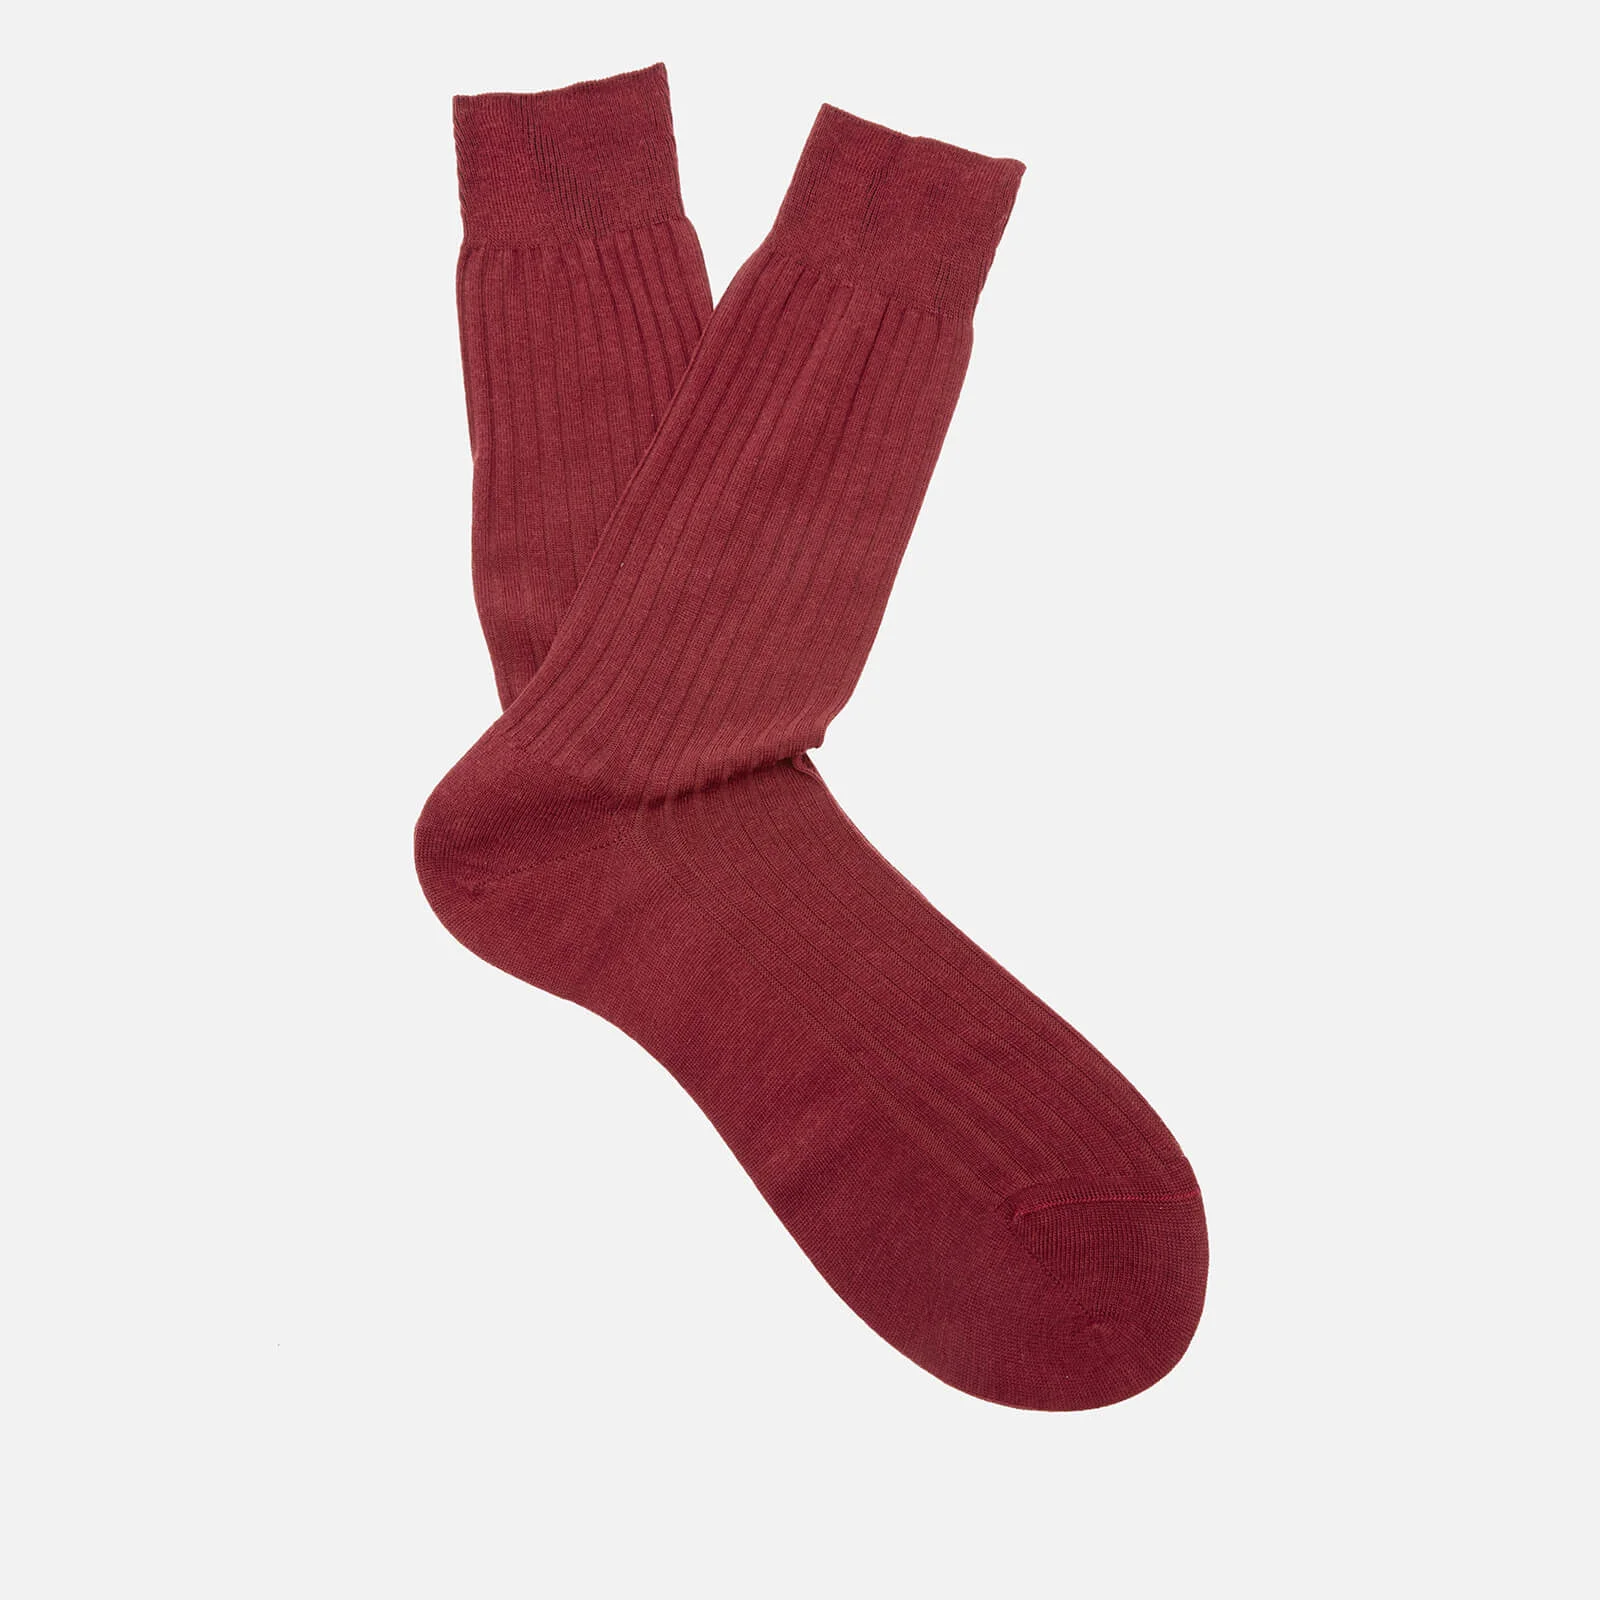 Pantherella Men's Labernum Merino Rib Socks - Wine Image 1